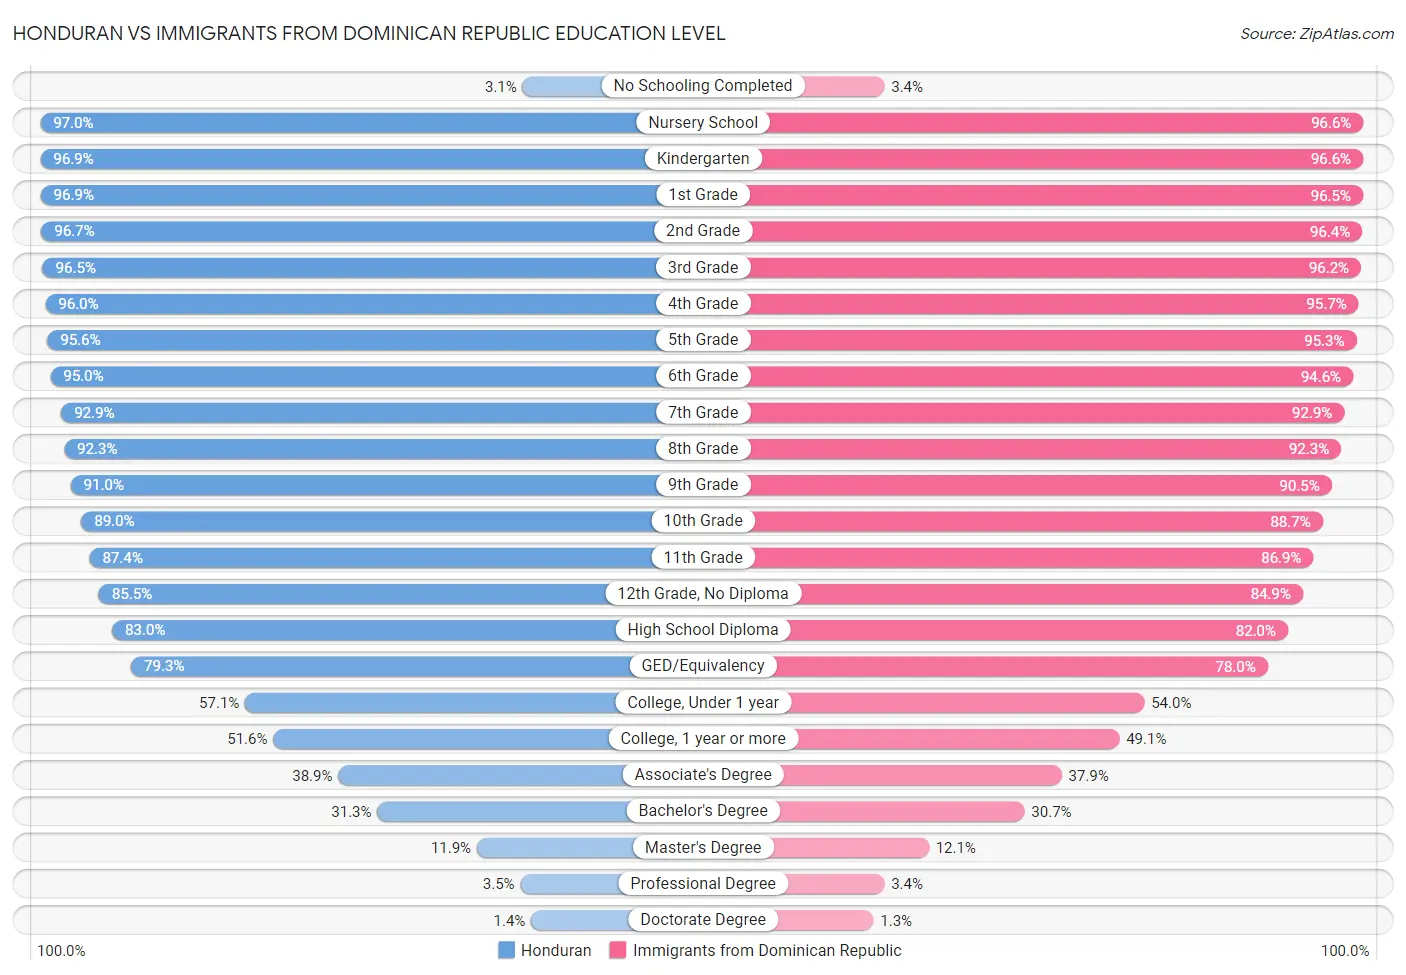 Honduran vs Immigrants from Dominican Republic Education Level